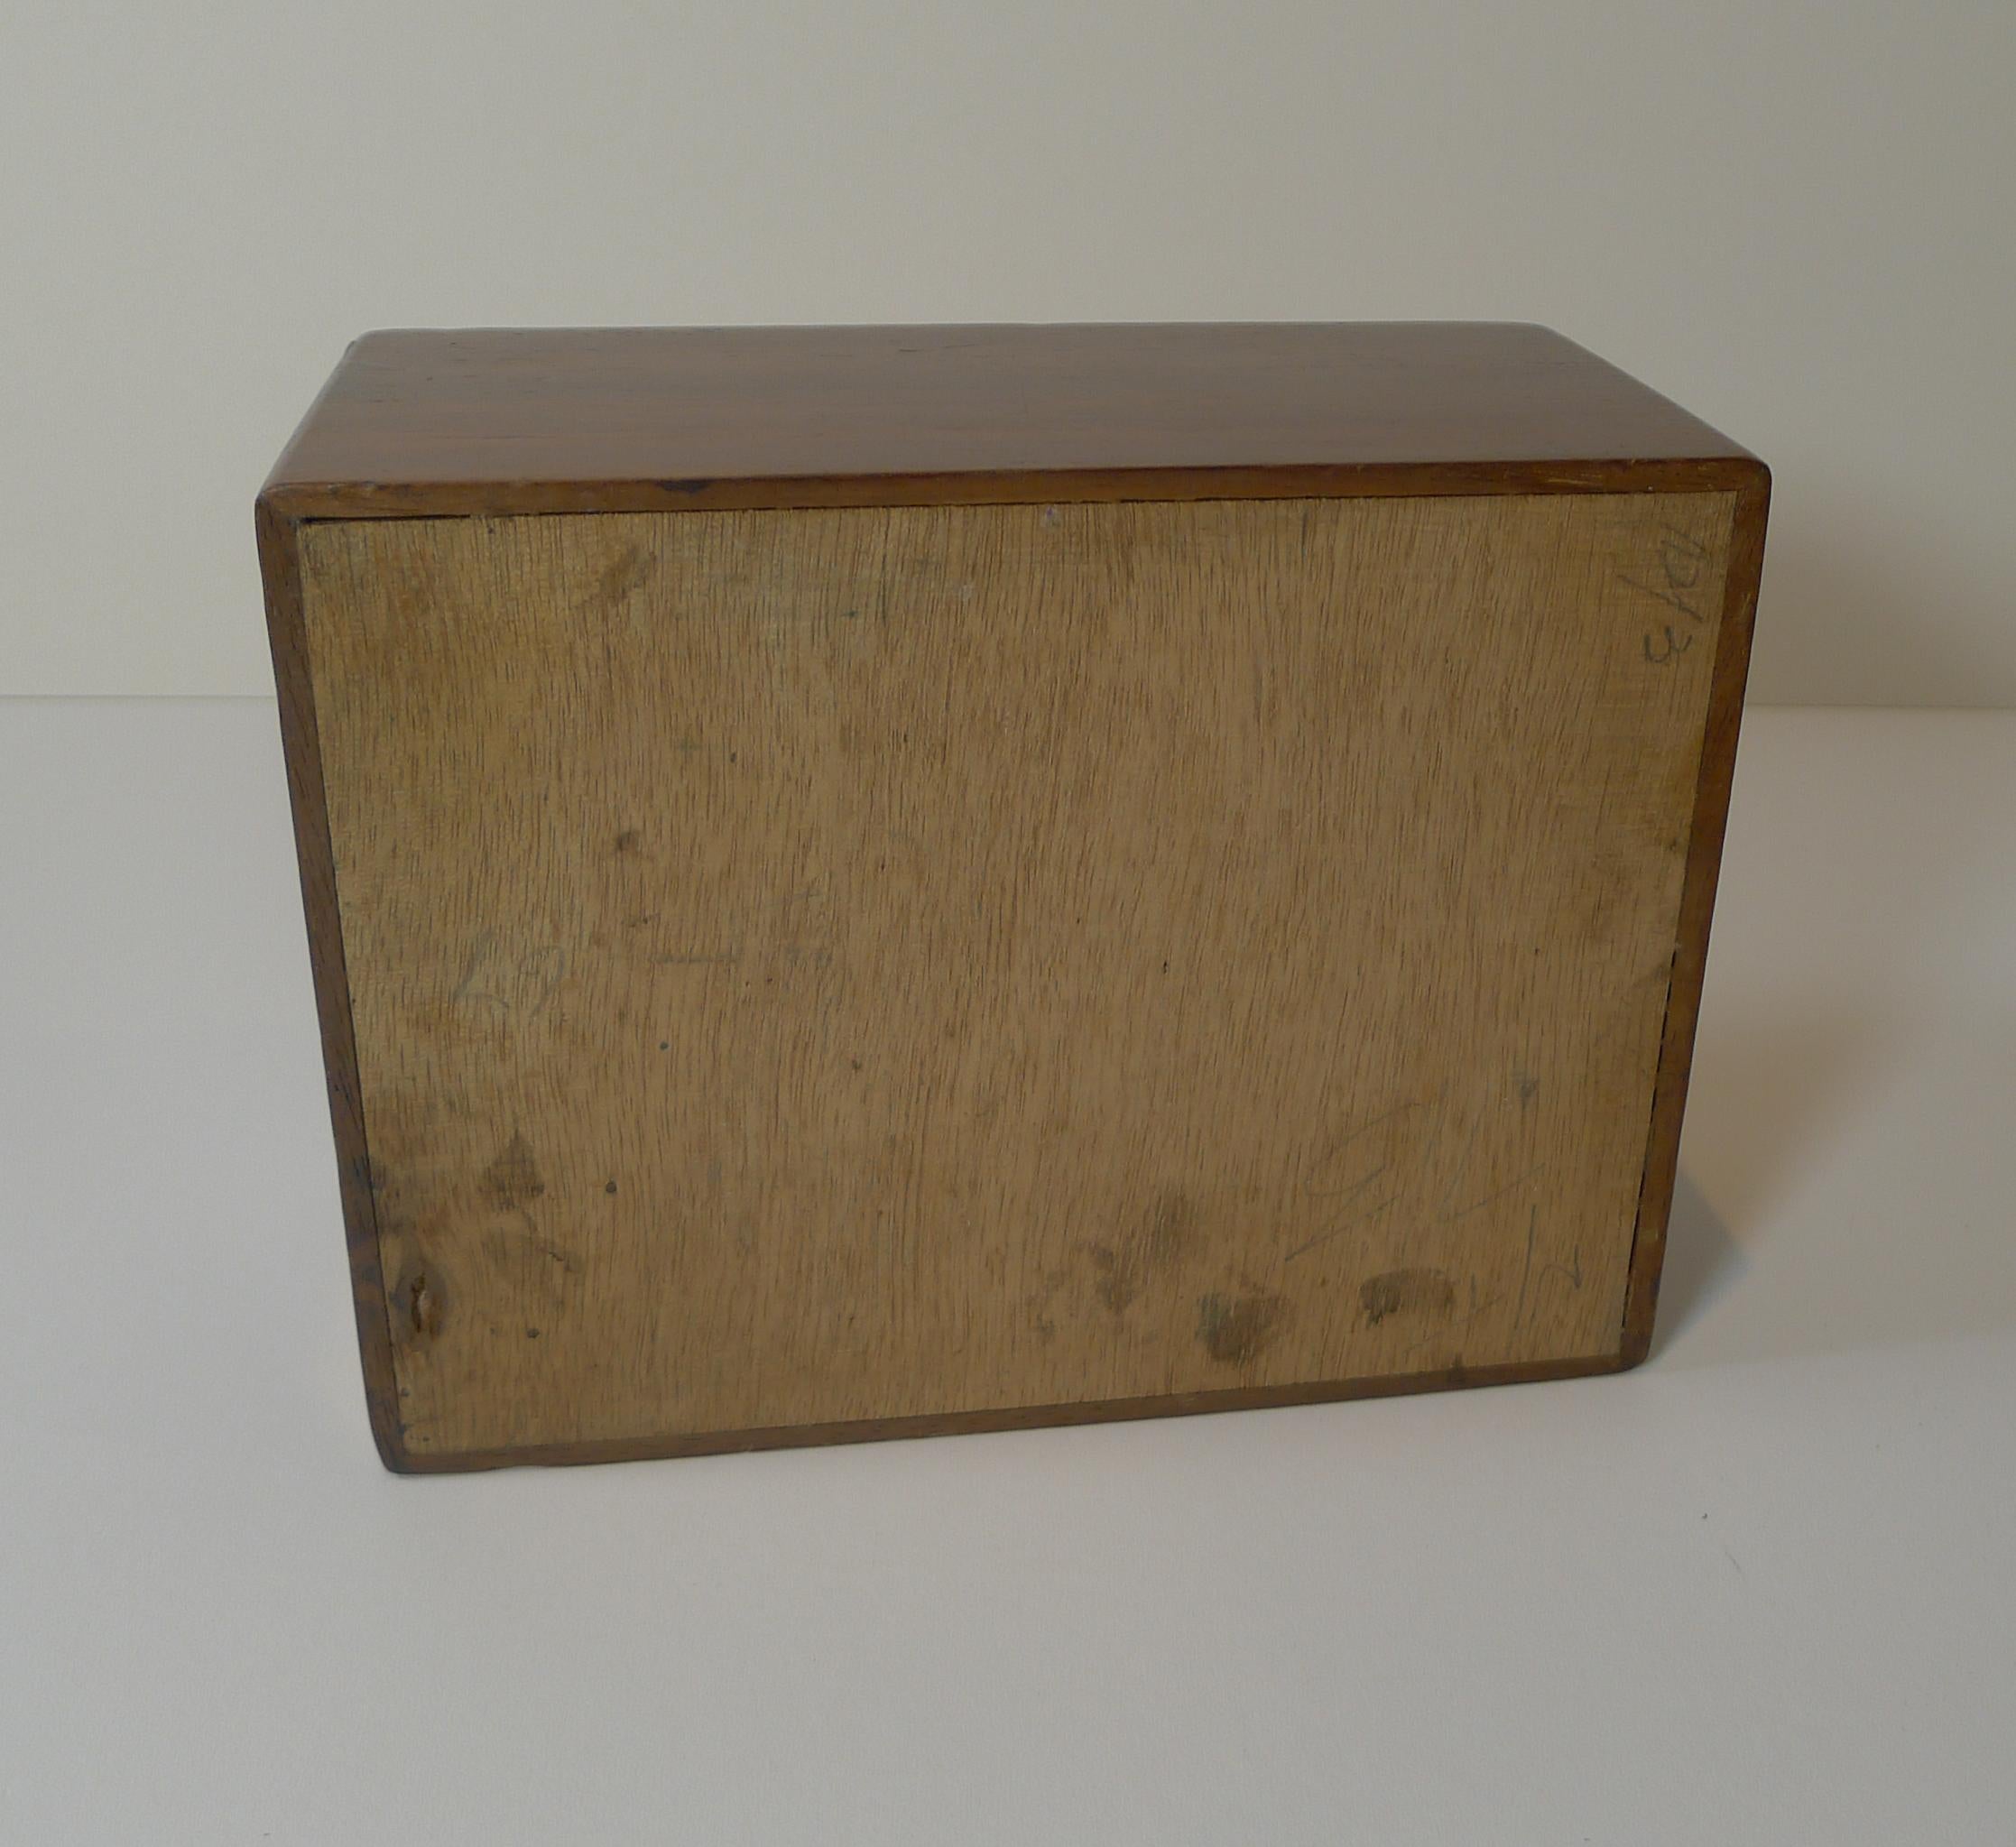 Early 20th Century Antique English Boxwood Chess Set With Storage Box c.1910